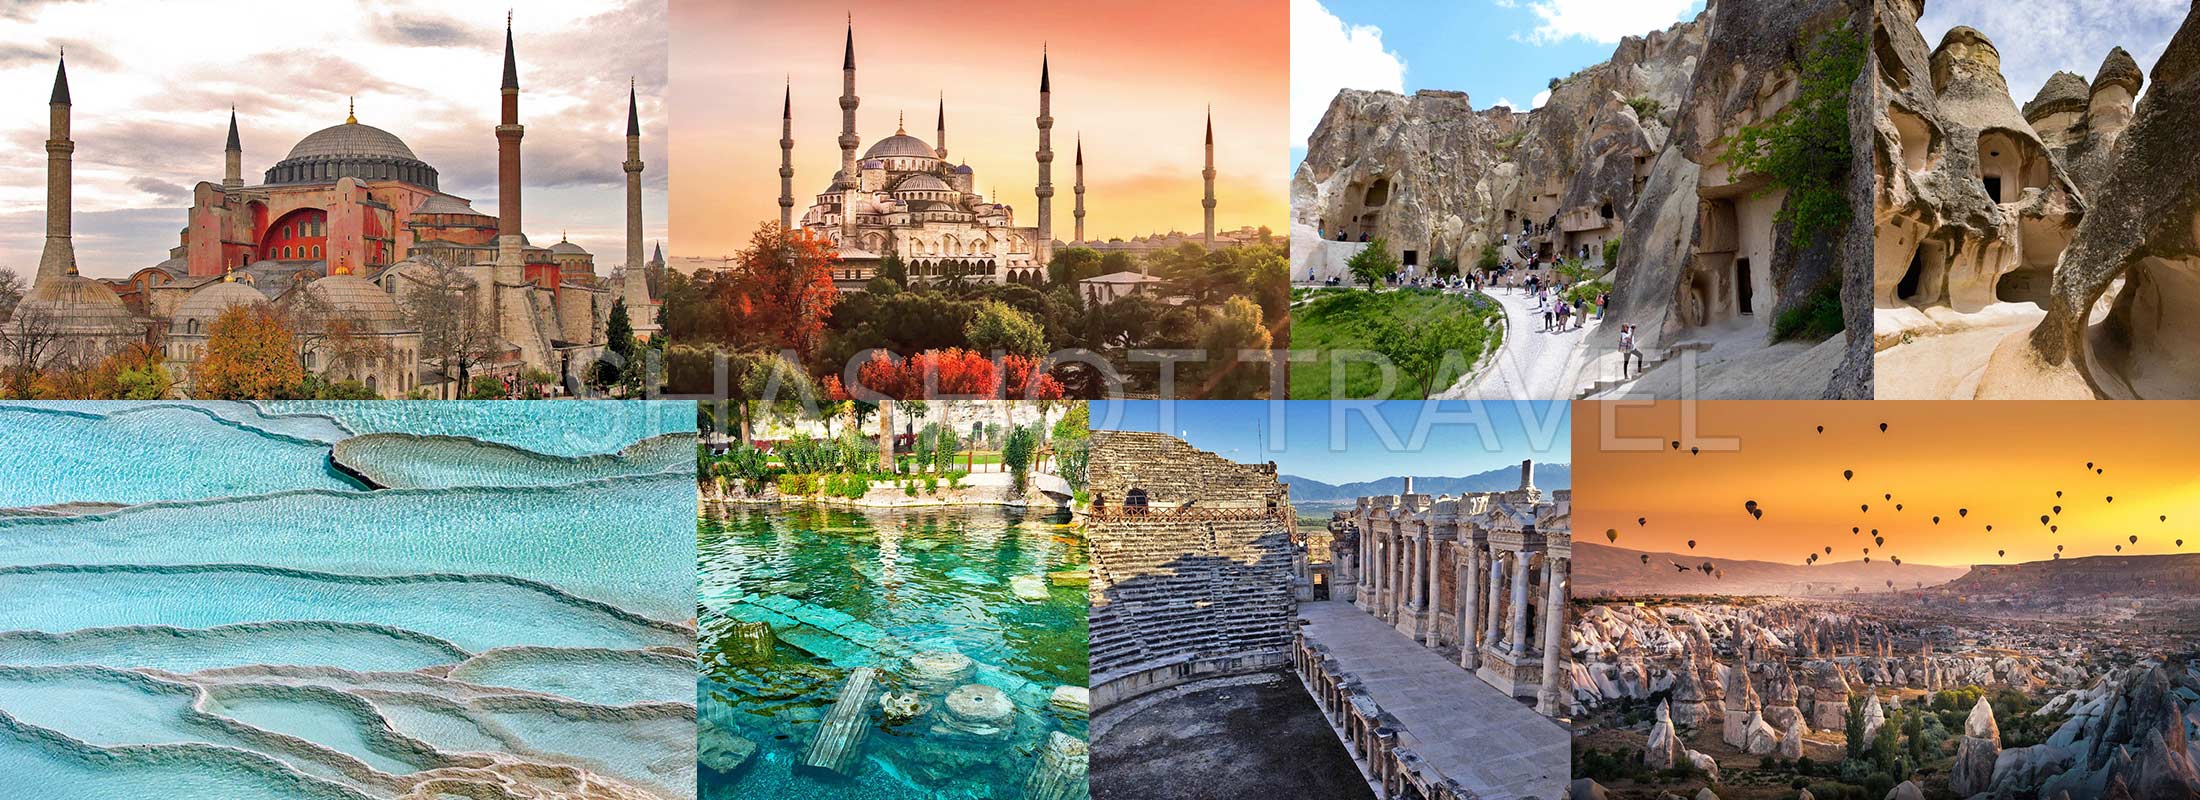 6-DAYS-TURKEY-PACKAGE-TOUR-ISTANBUL-CAPPADOCIA-PAMUKKALE-HIERAPOLIS